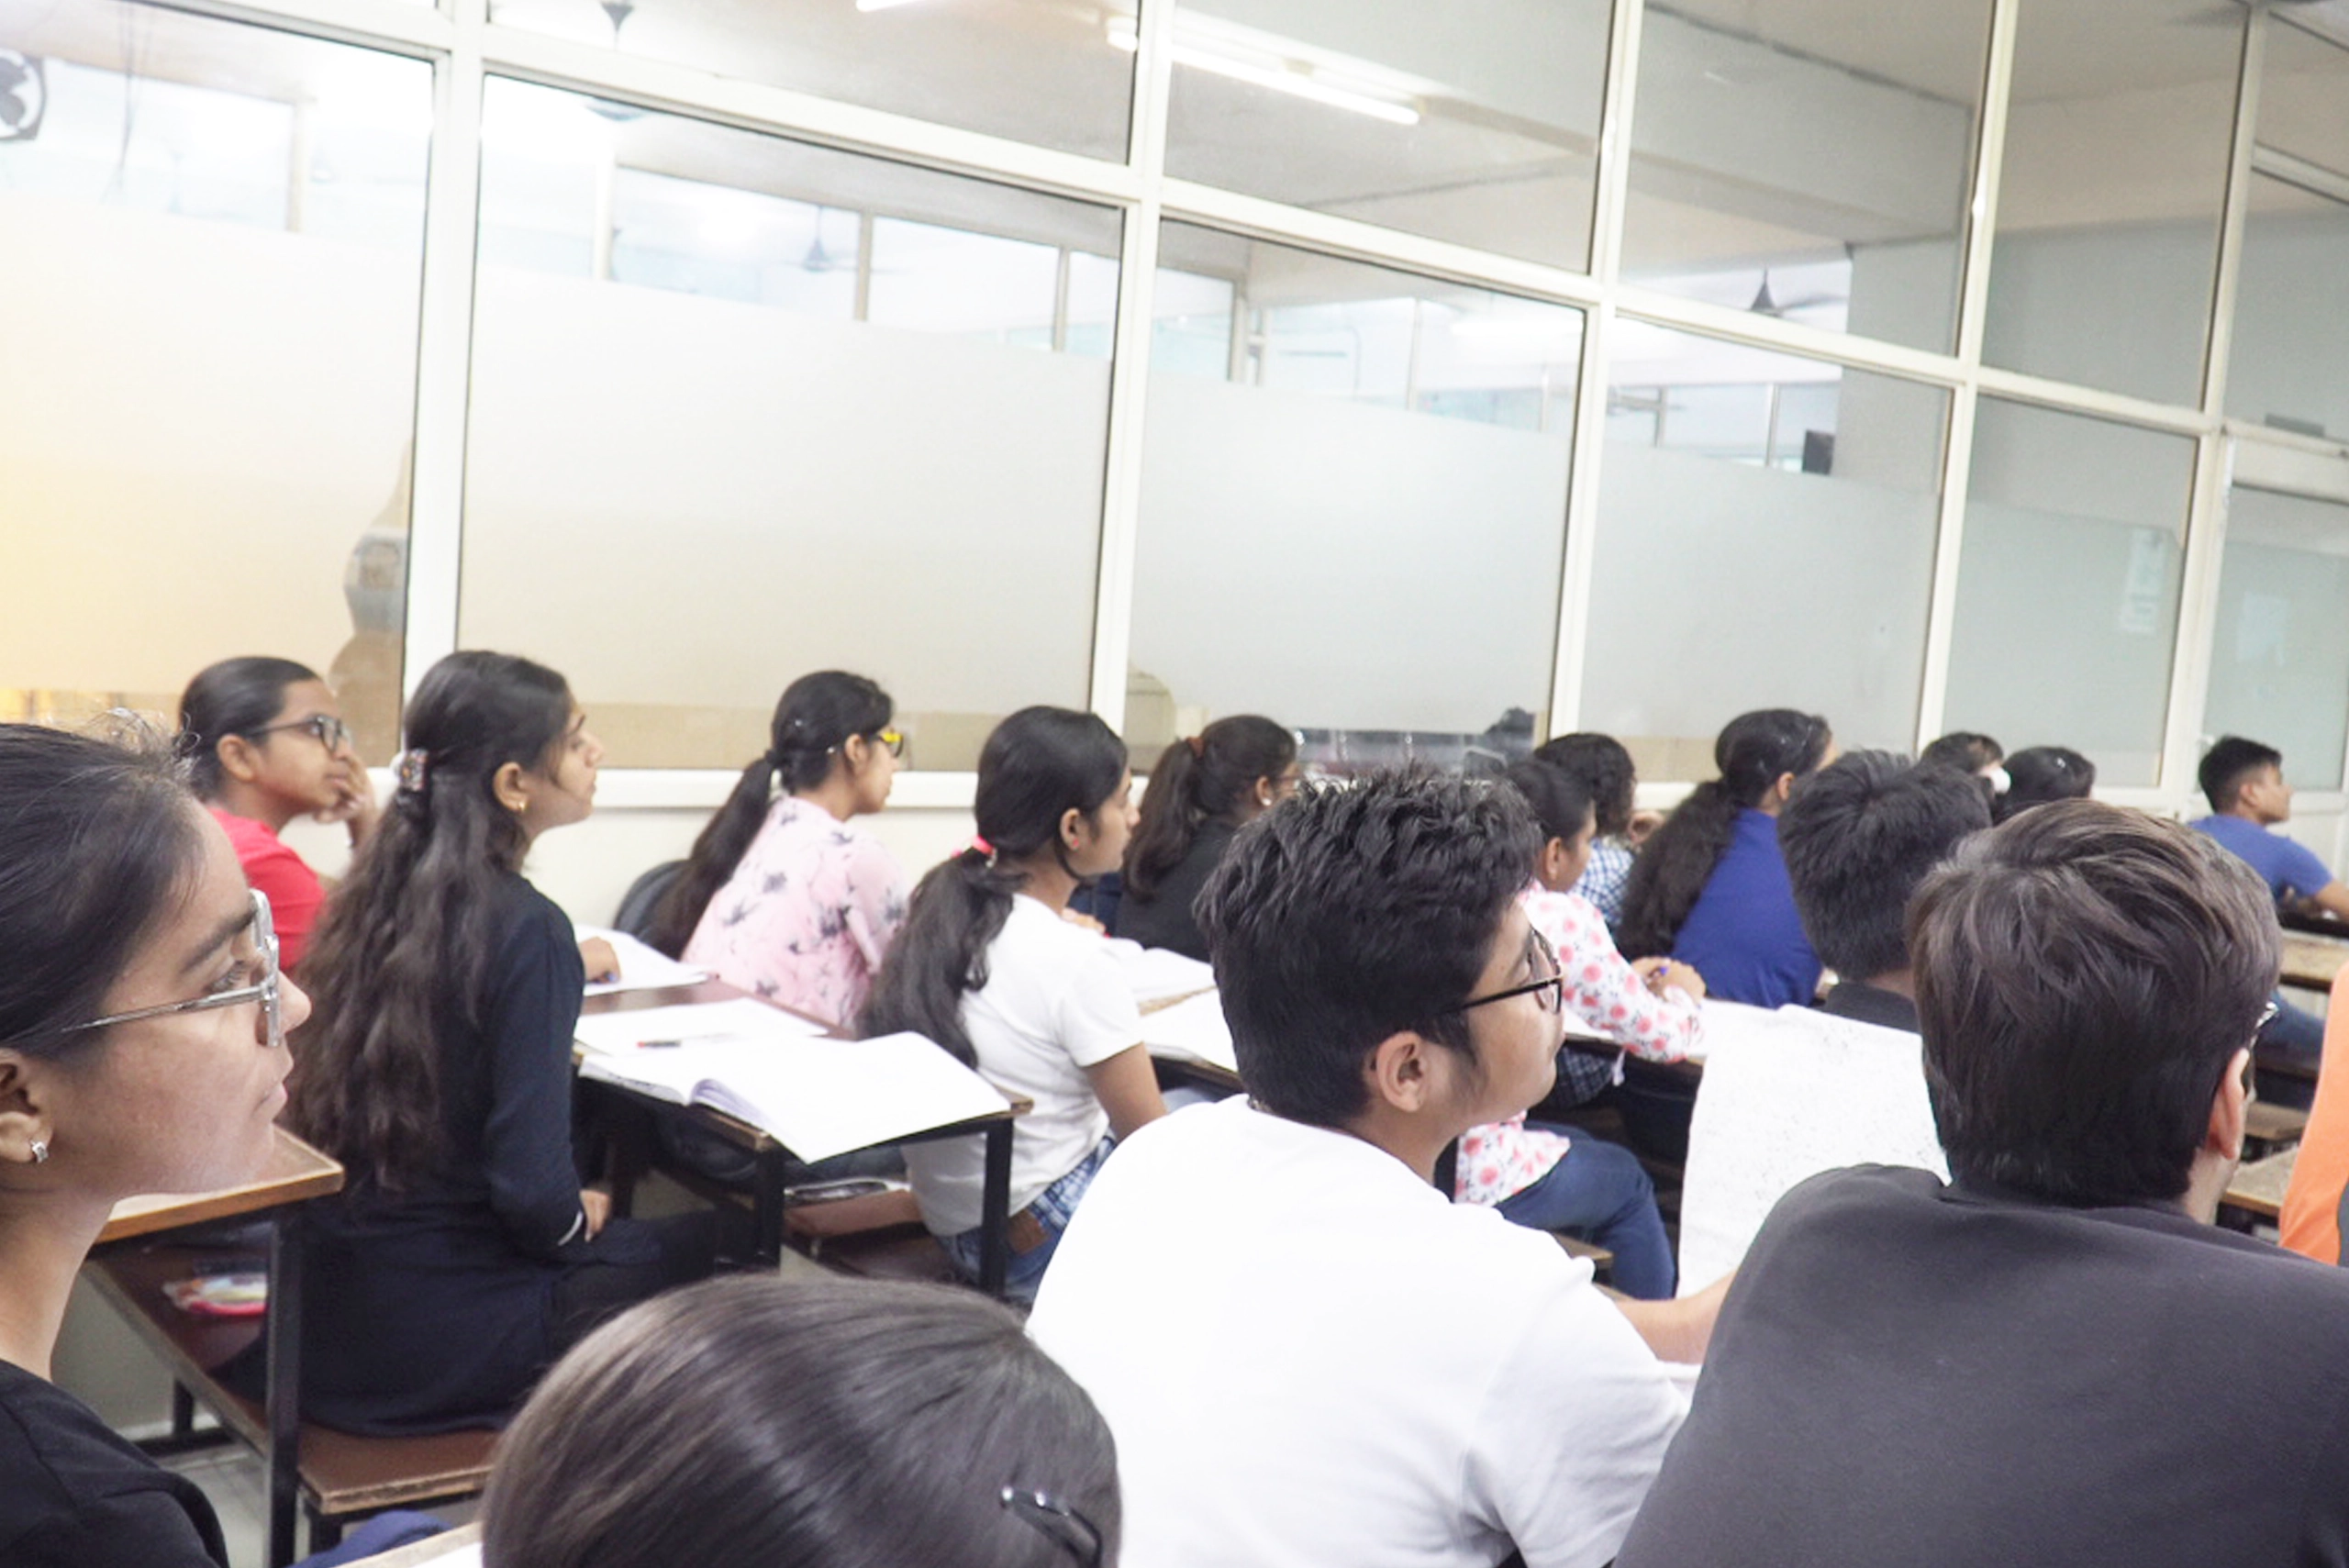 students Attending class